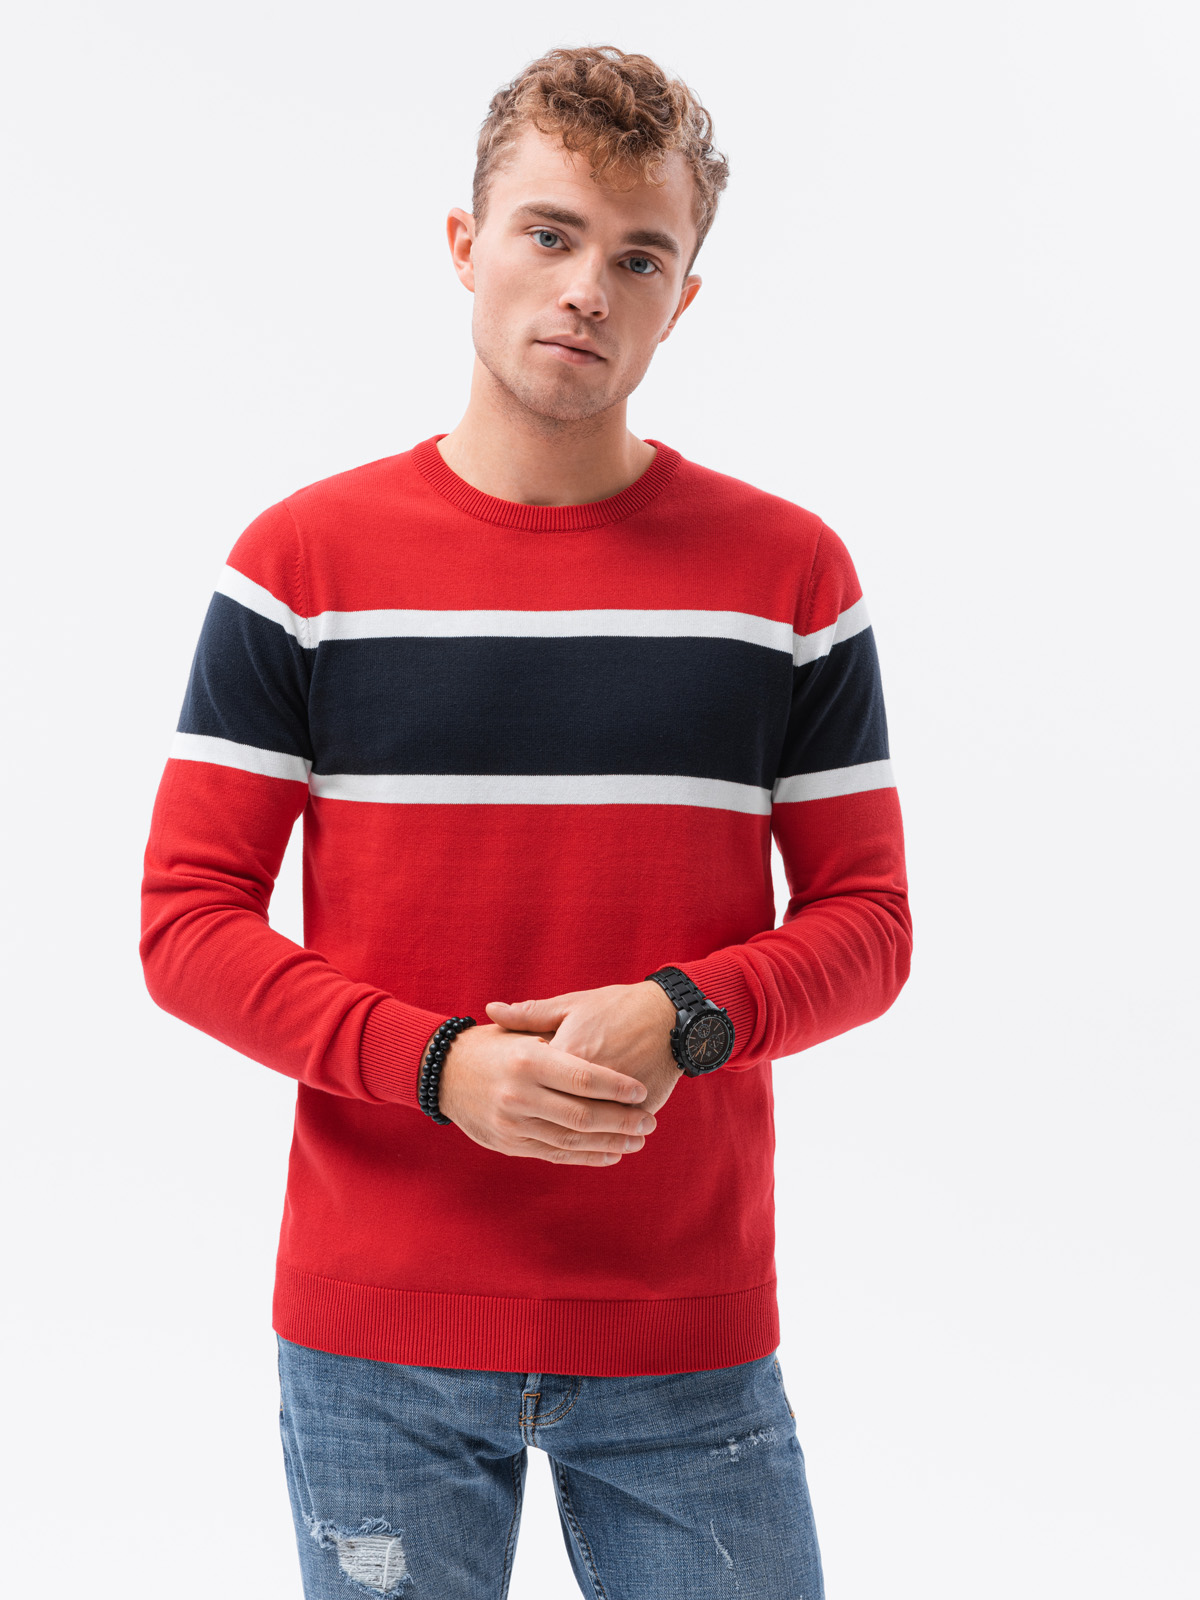 Men's sweater - red E190 | Ombre.com - Men's clothing online